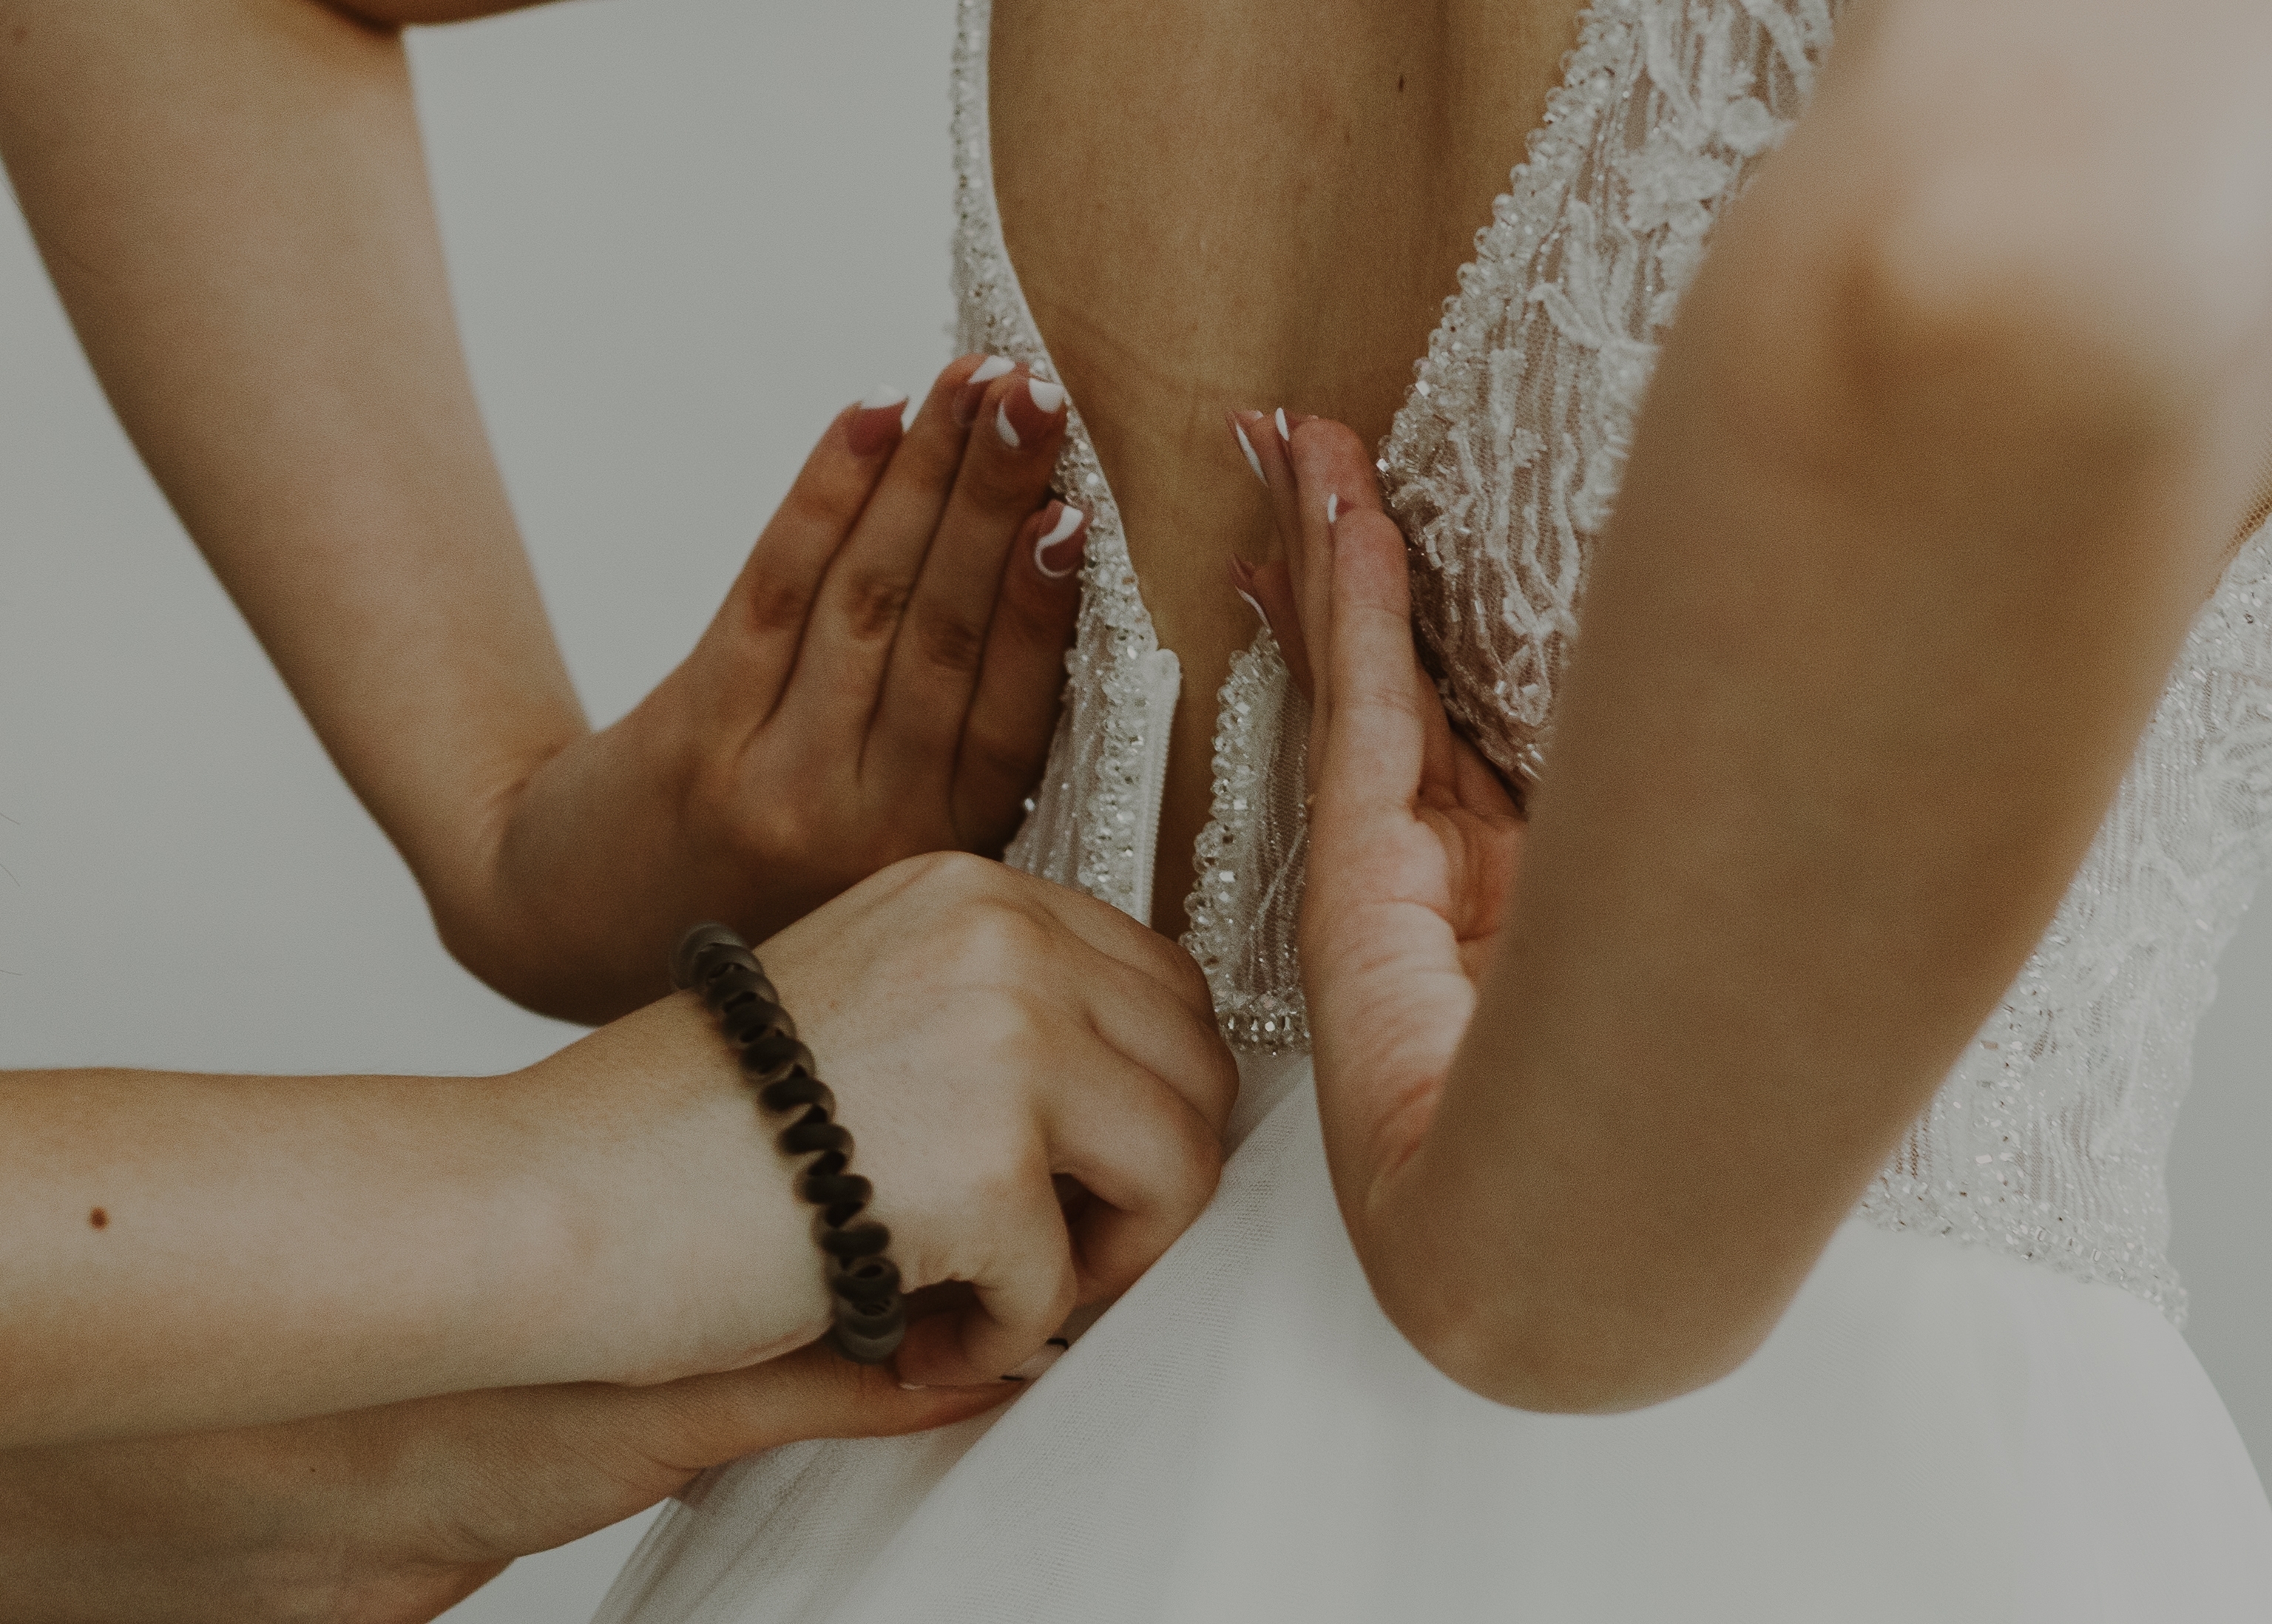 Une mariée en train d'essayer une robe | Source : Shutterstock